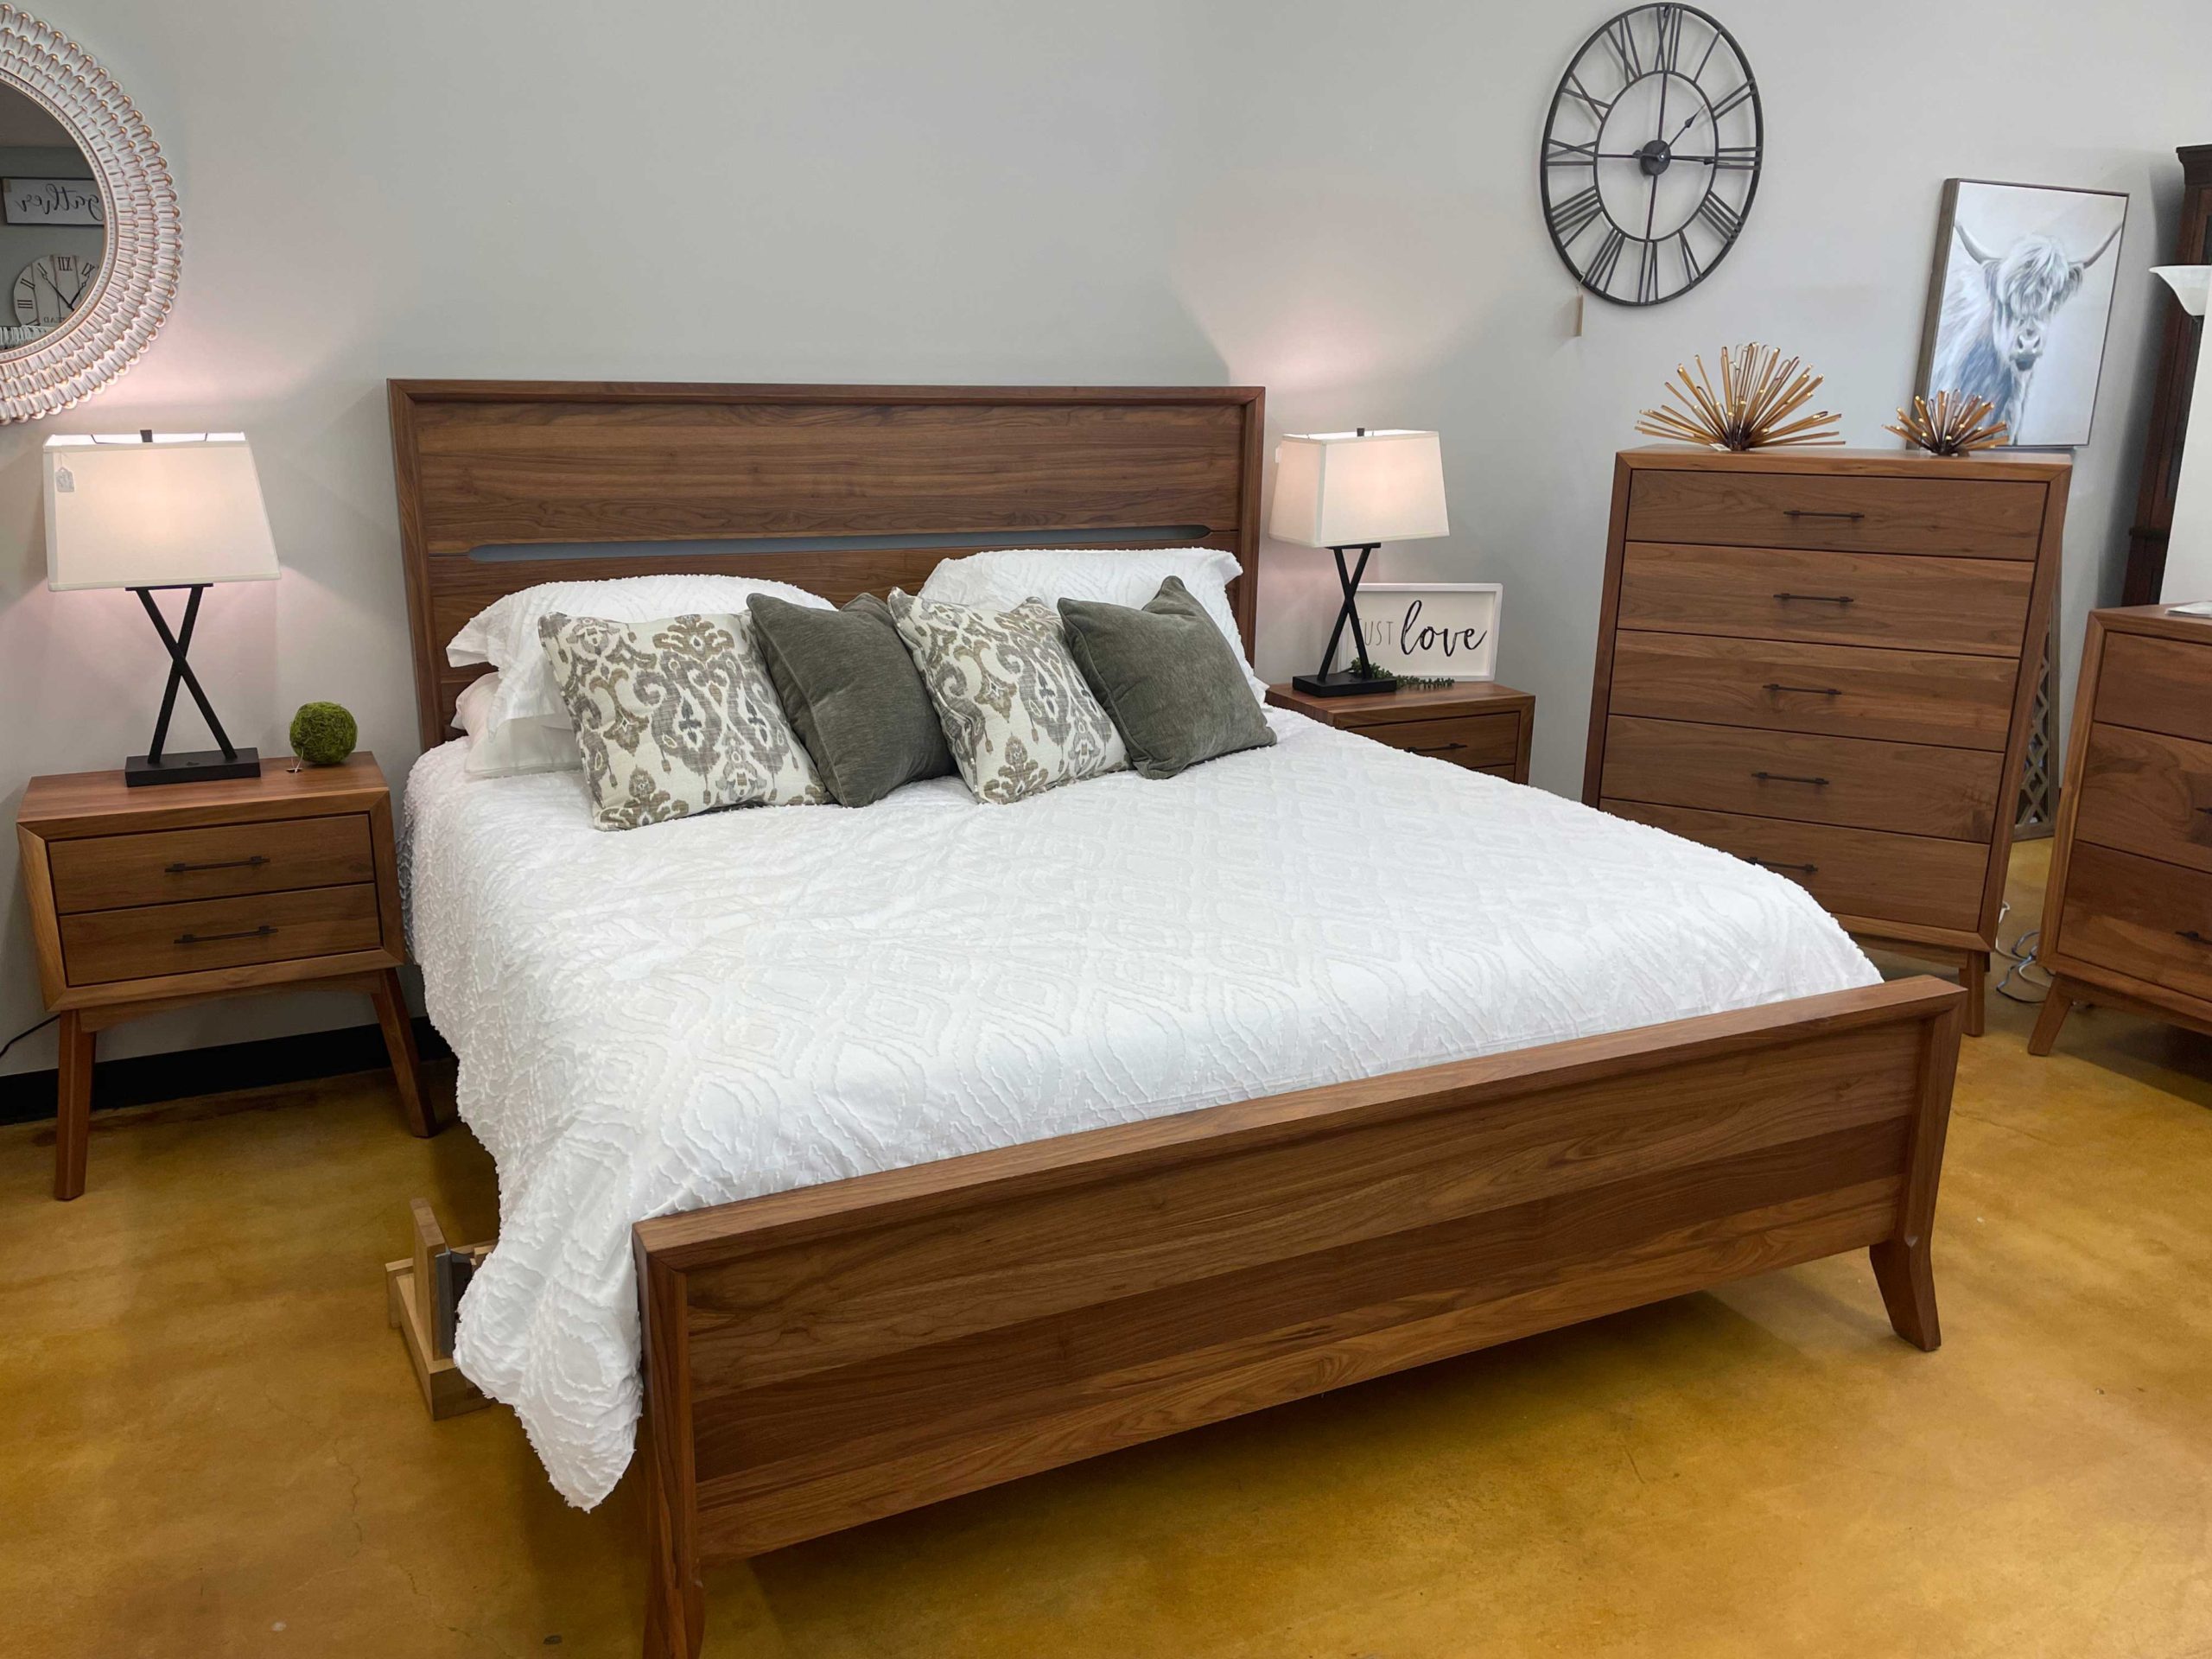 bedroom with wooden furnitures